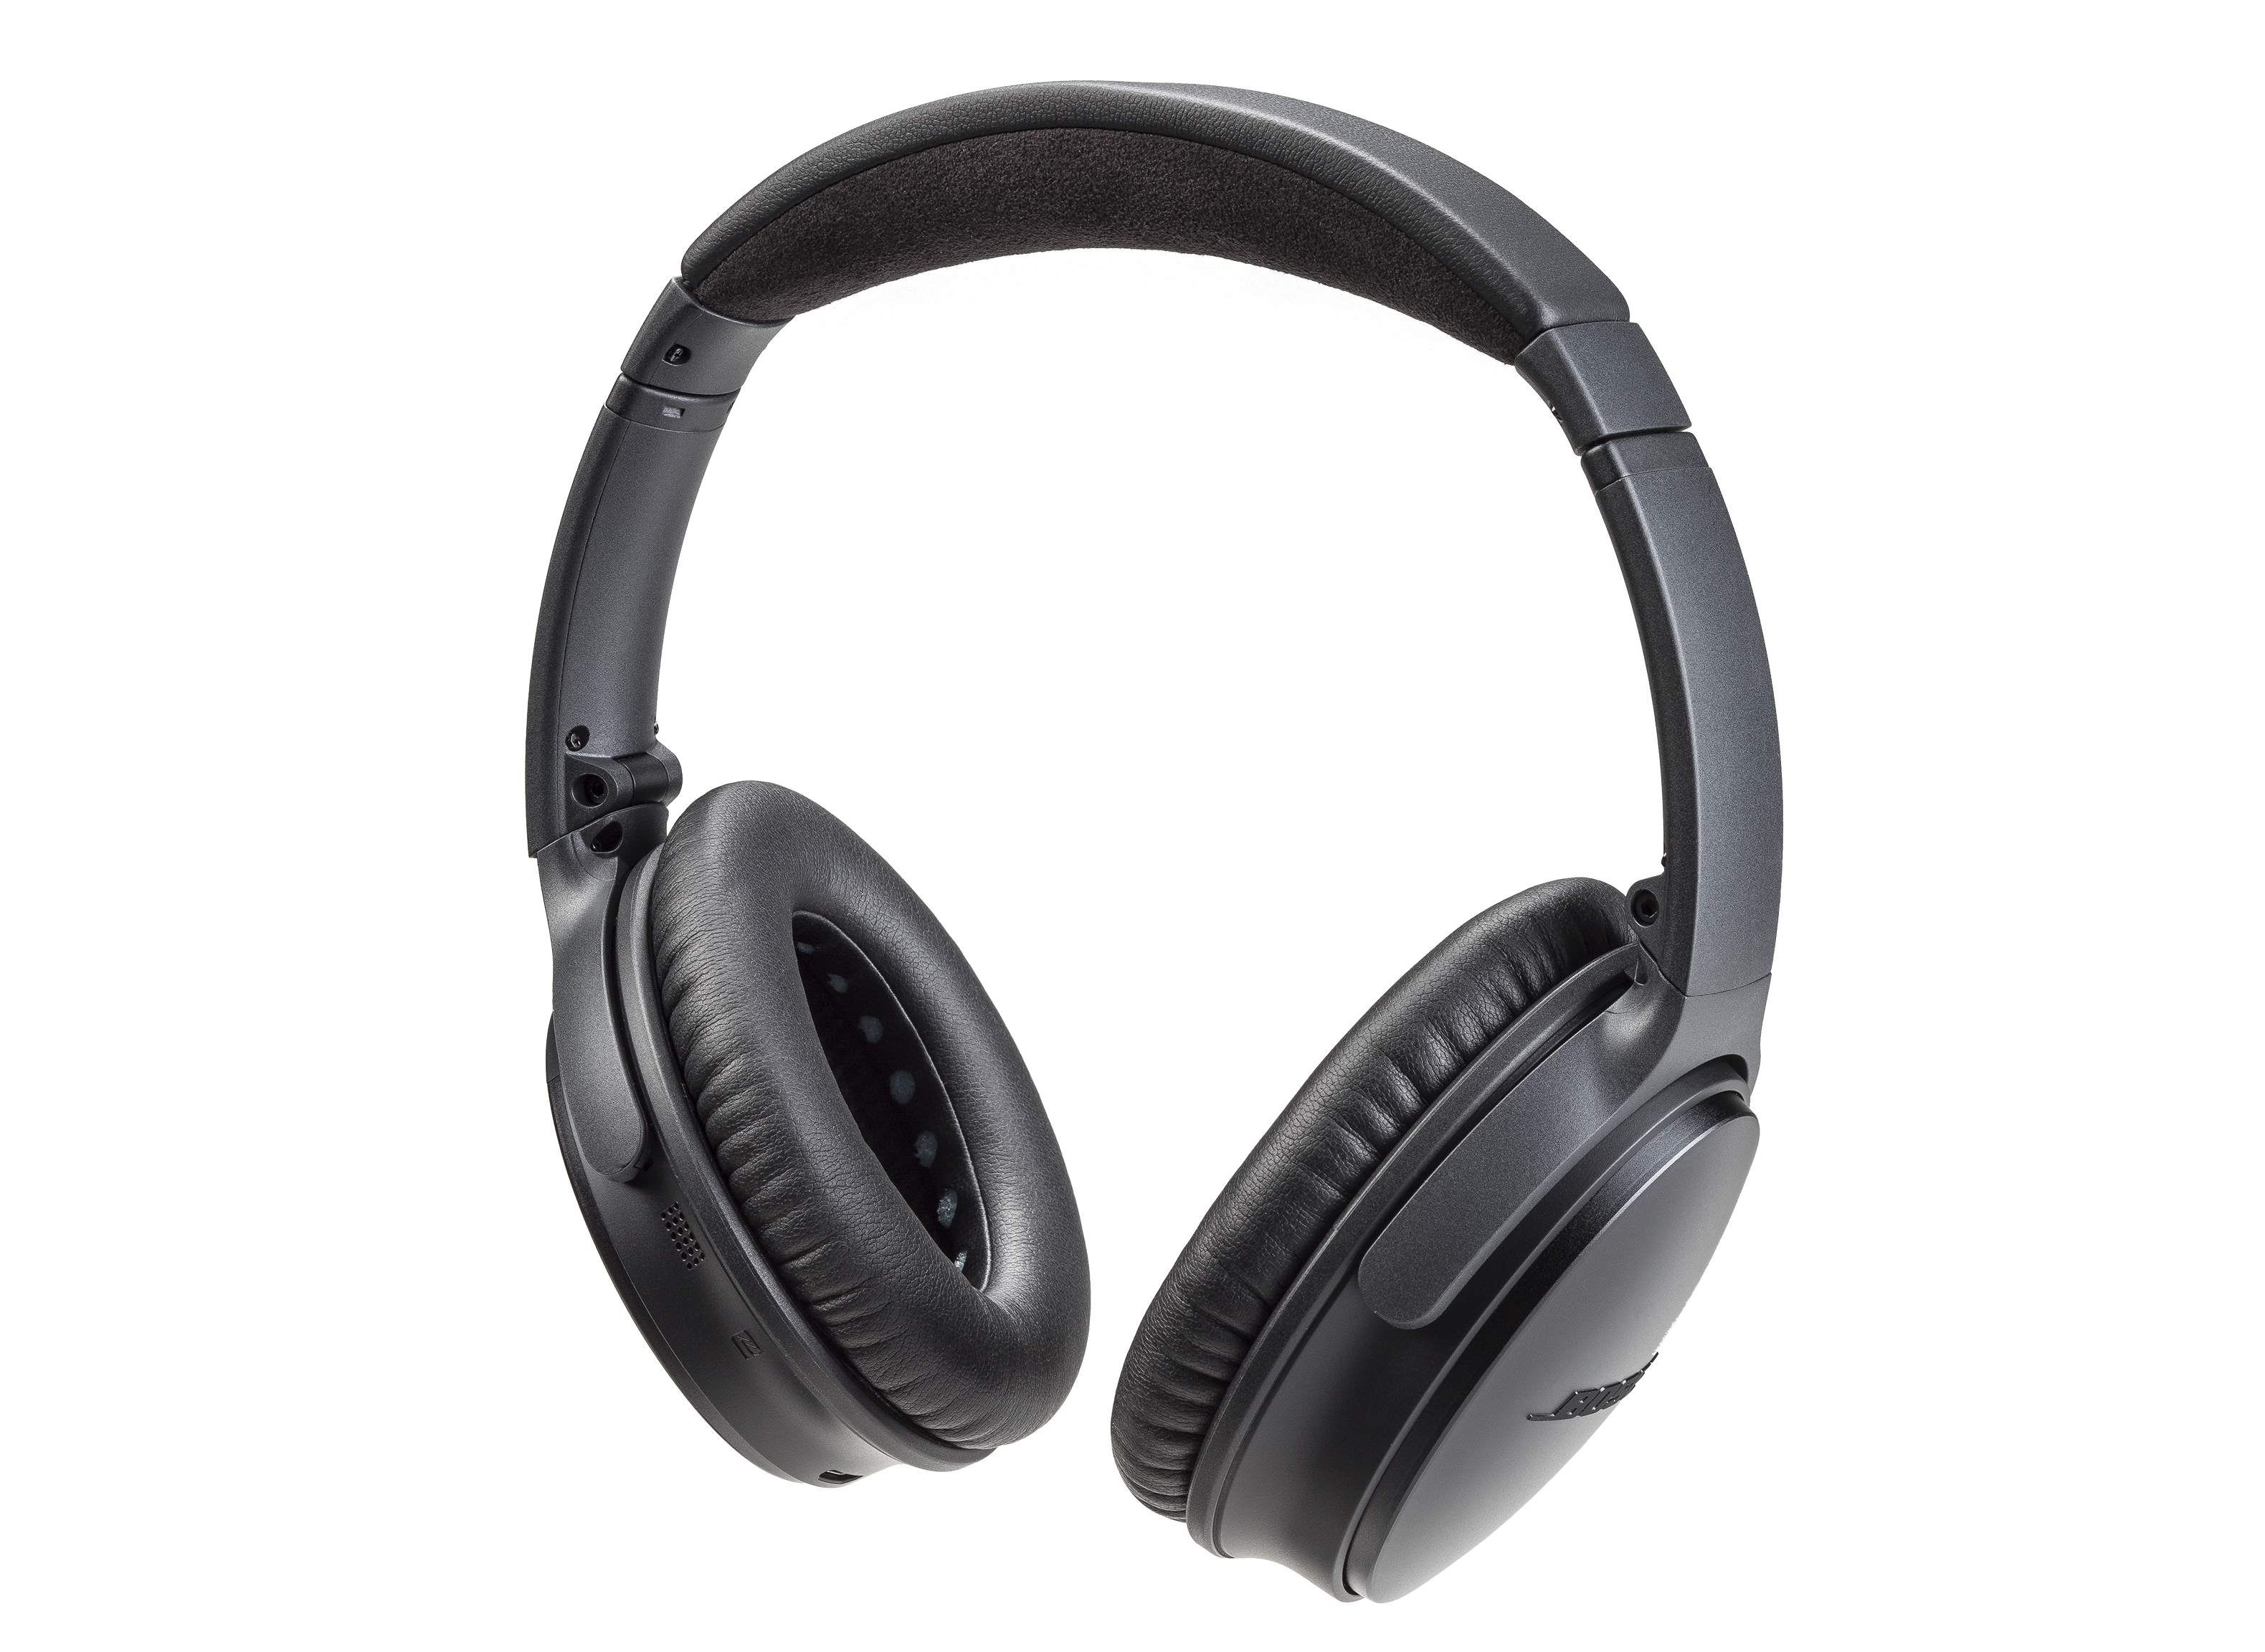 Bose QuietComfort 35 Series II Headphone Review - Consumer Reports